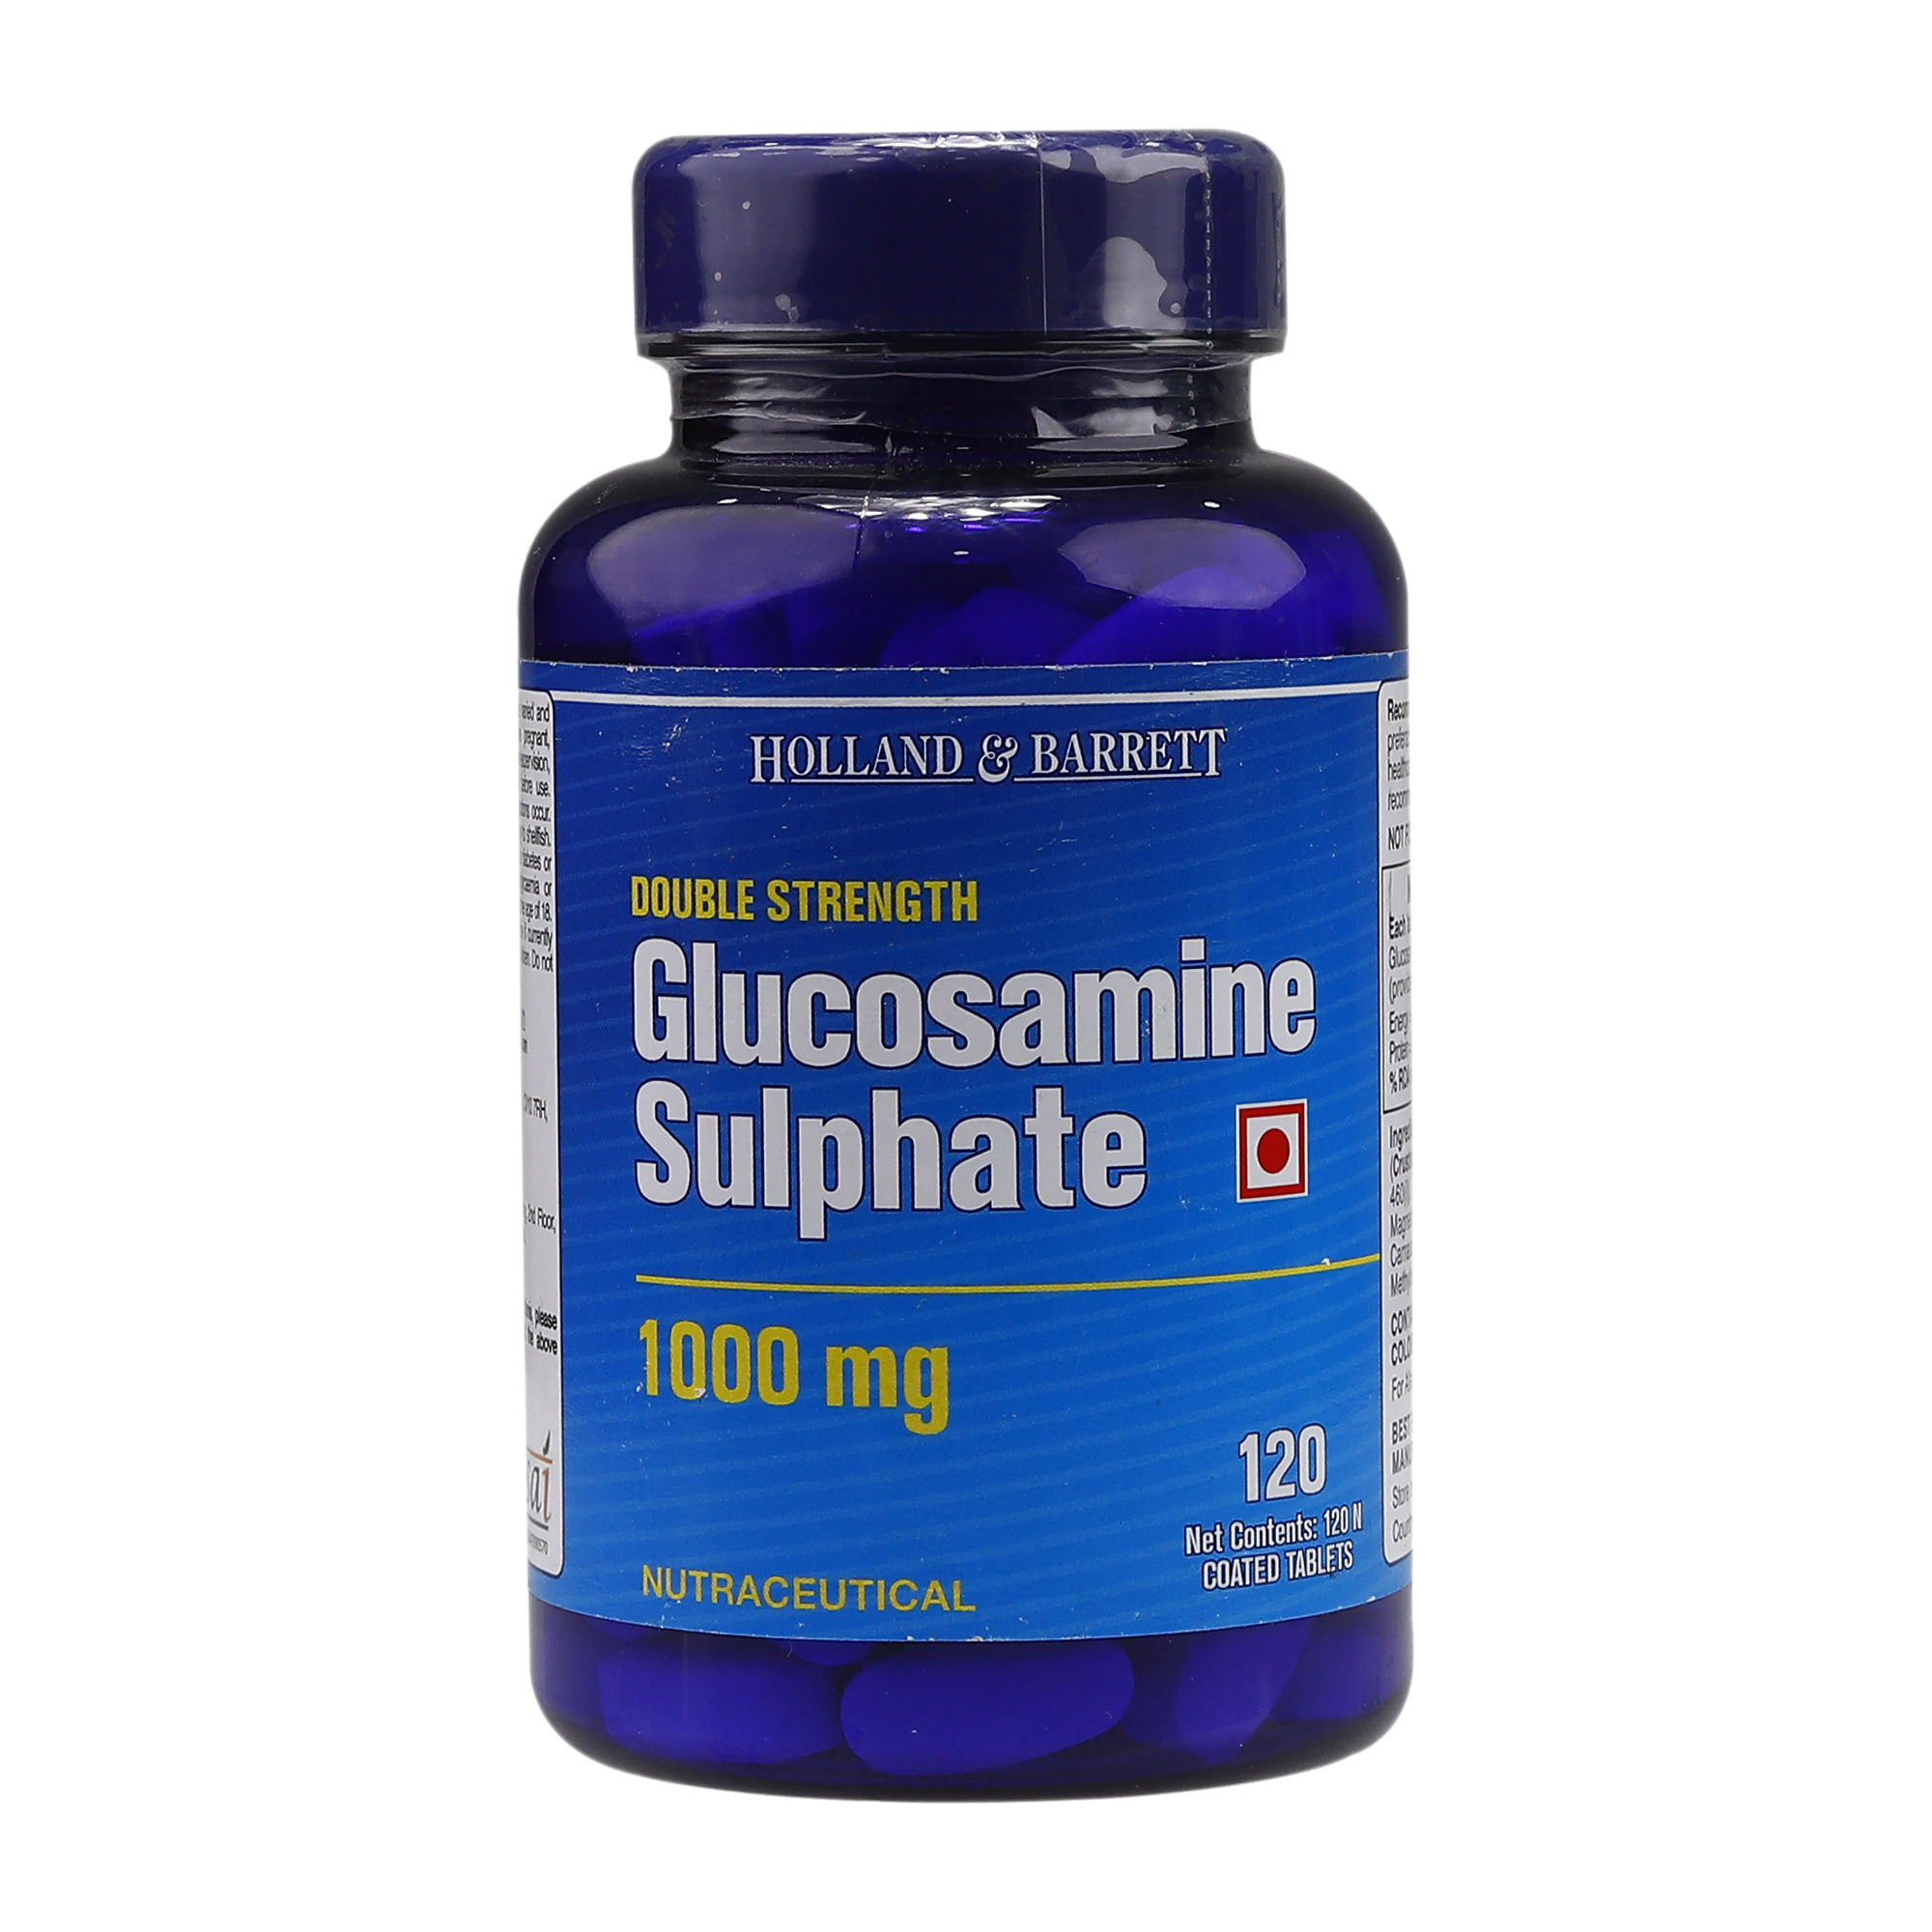 Buy Holland & Barrett Double Strength Glucosamine Sulphate 1000 mg, 120 Caplets Online